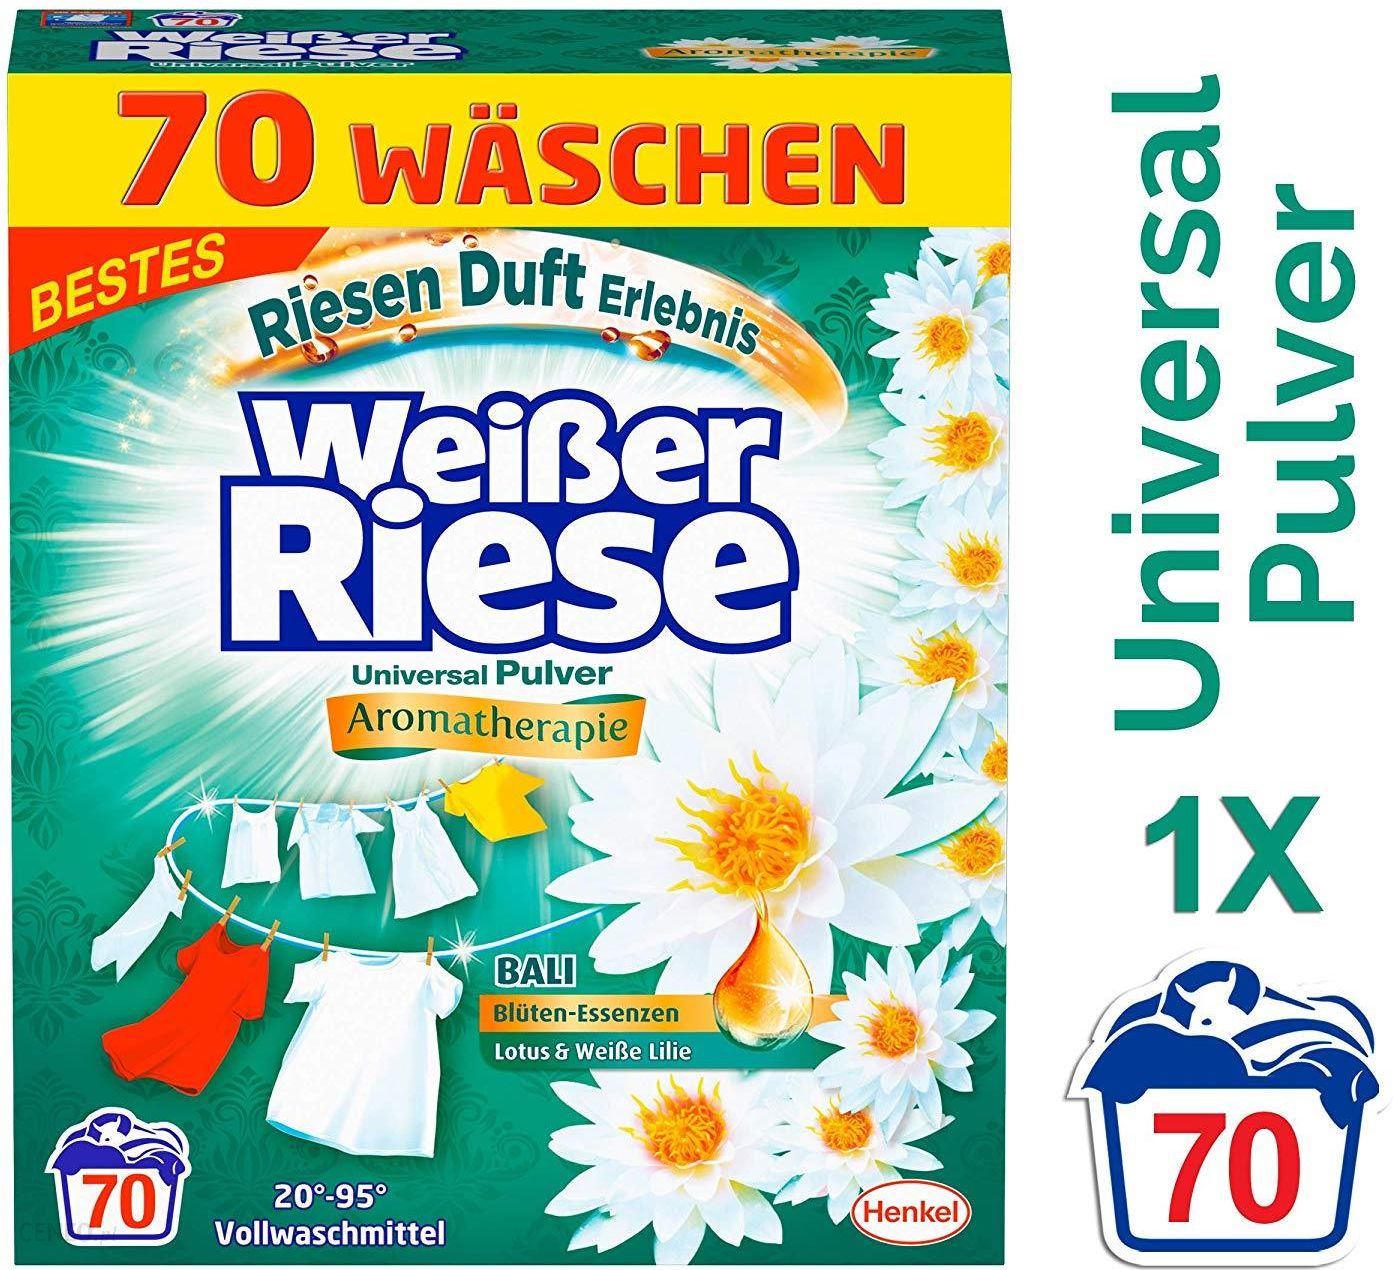 Weisser Riese Universal Bali Lilie & 3,85 Opinie Pulver i White Lotus atrakcyjne - ceny kg na 70 prań